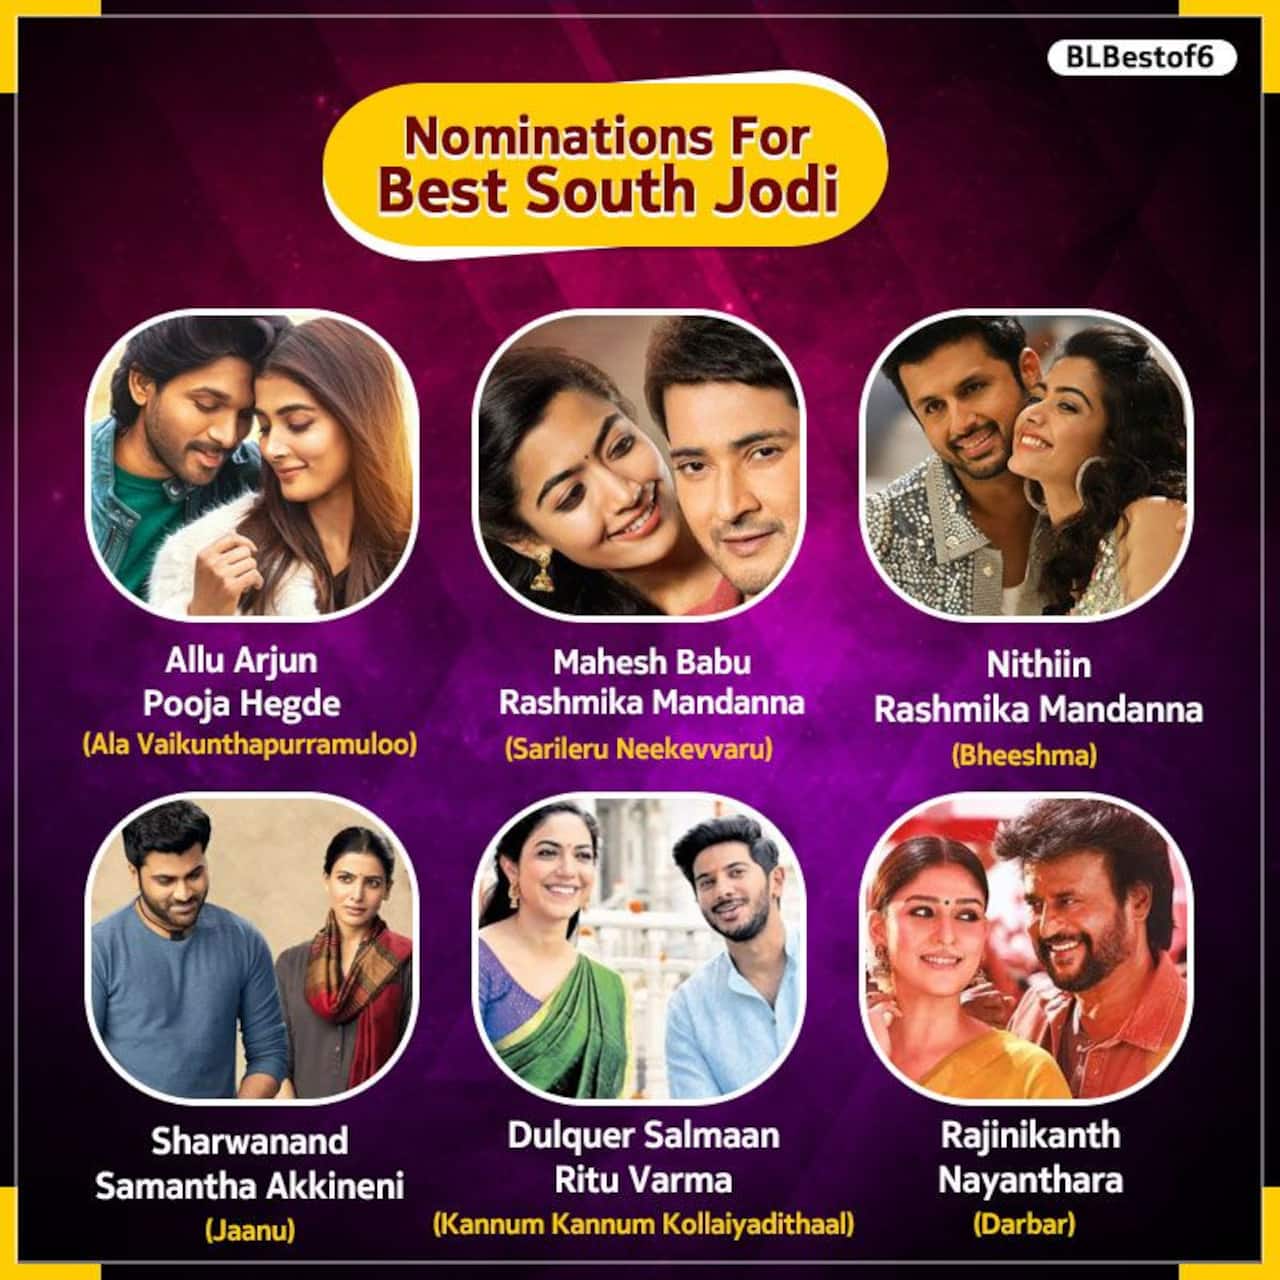 #BLBestOf6: Allu Arjun-Pooja Hegde in Ala Vaikunthapurramuloo, Sharwanand-Samantha Akkineni in Jaanu – Vote for your fave South Jodi till mid – 2020